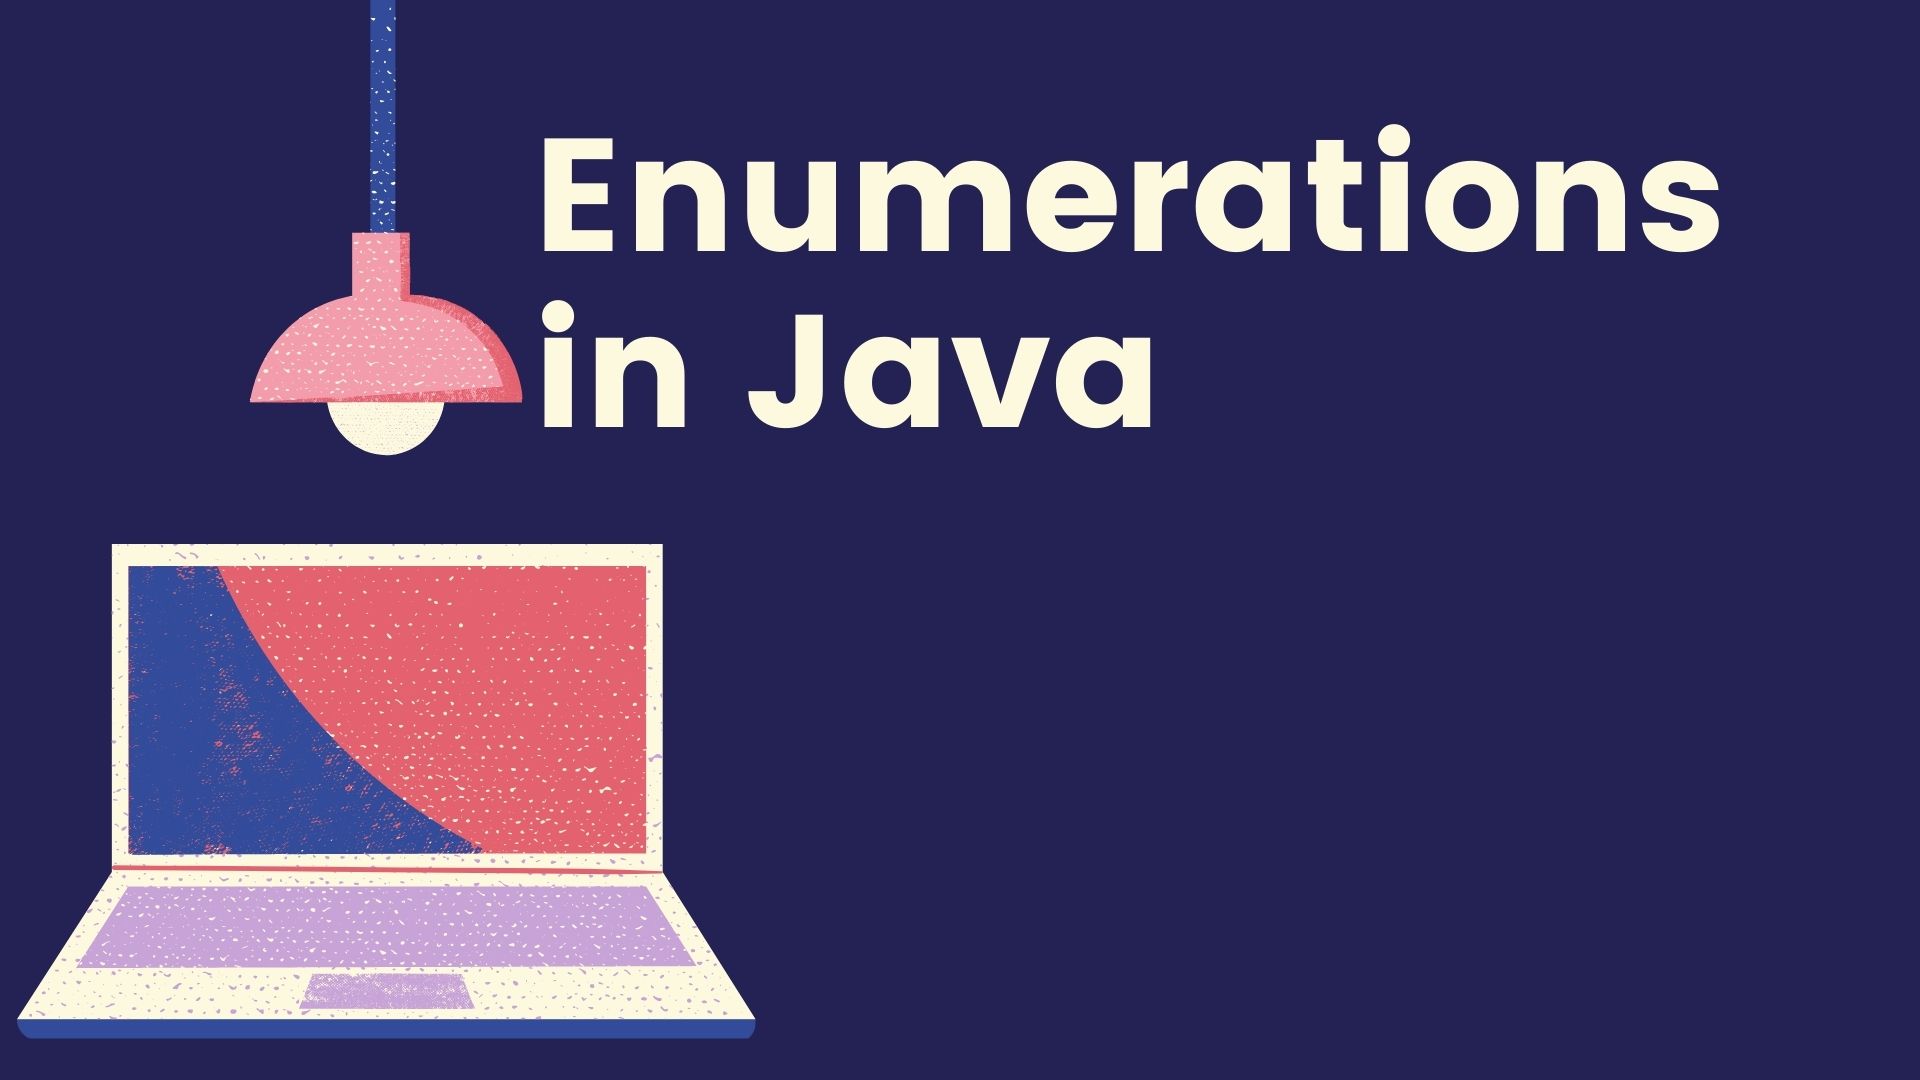 Enumerations in Java